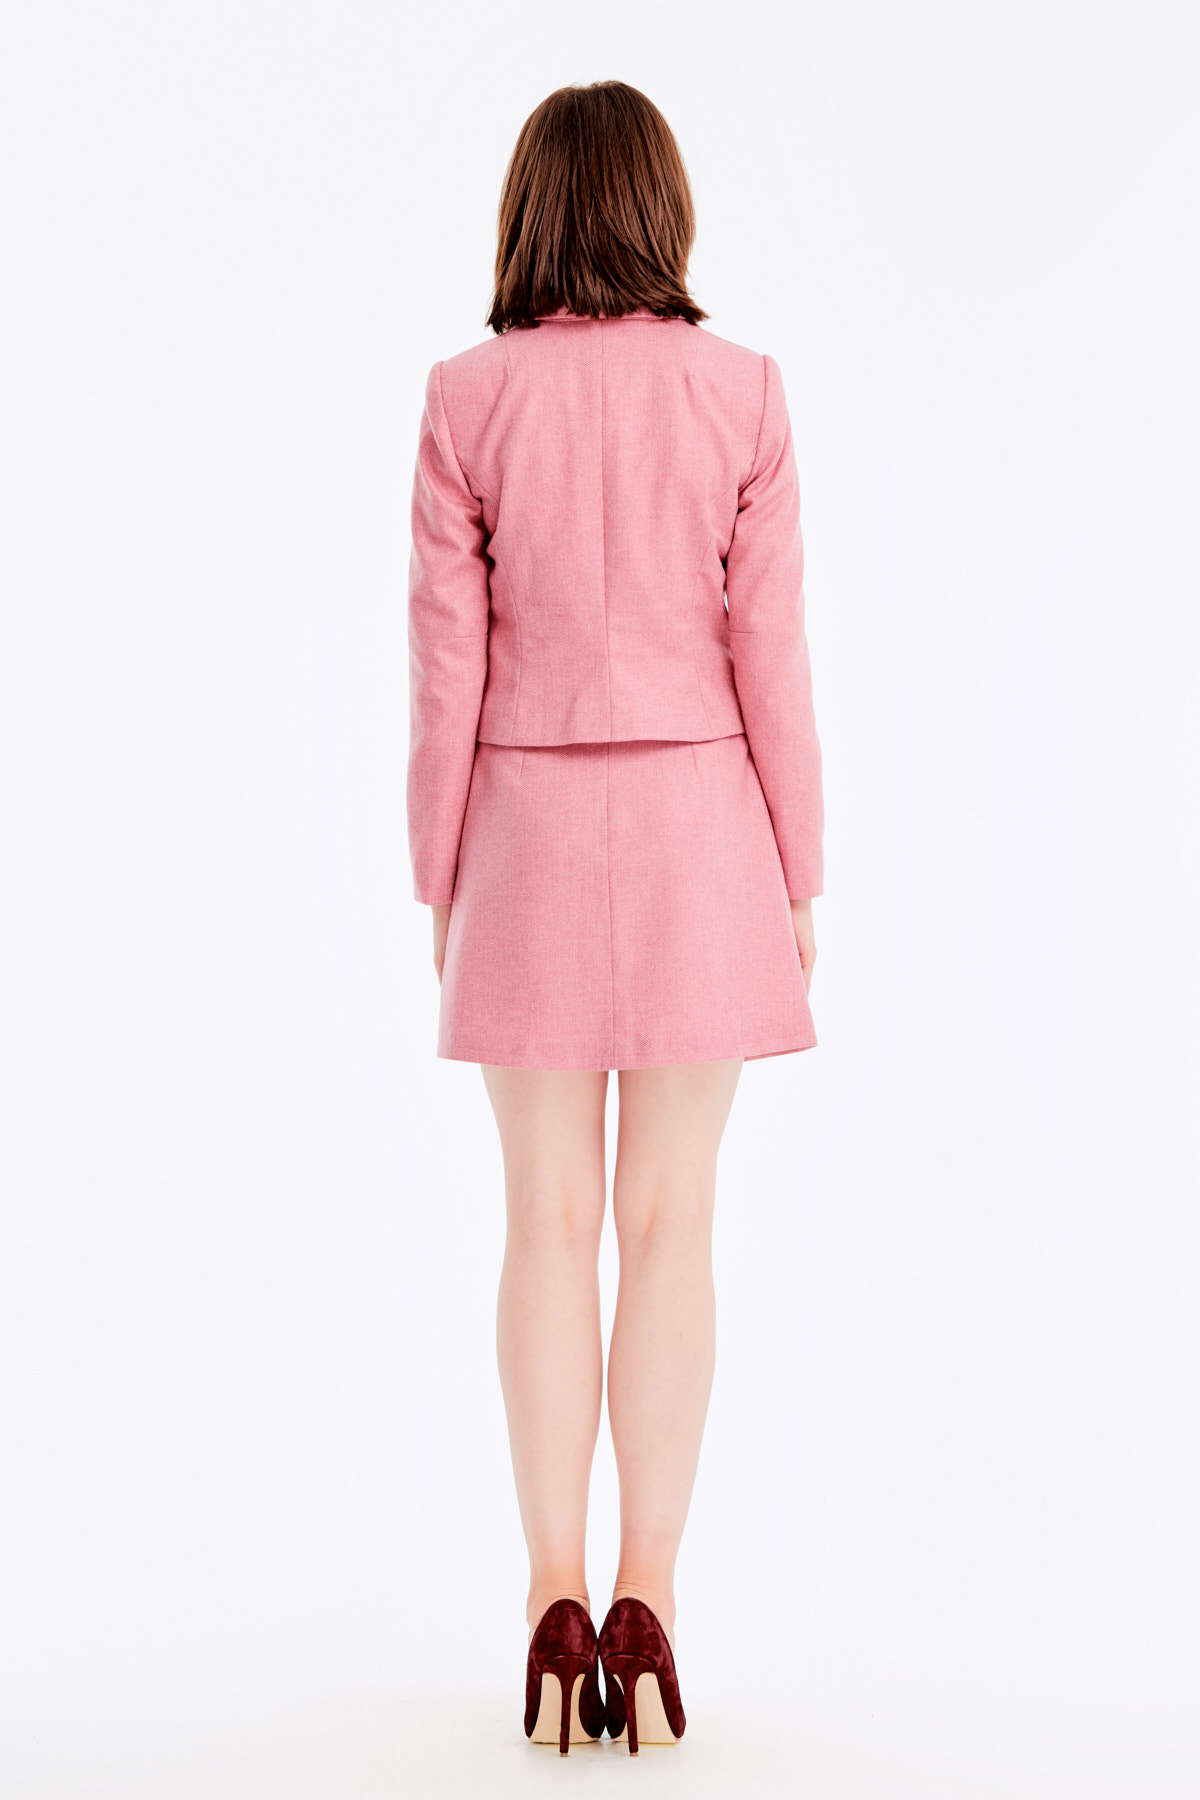 Short jacket with pink herringbone print, photo 7